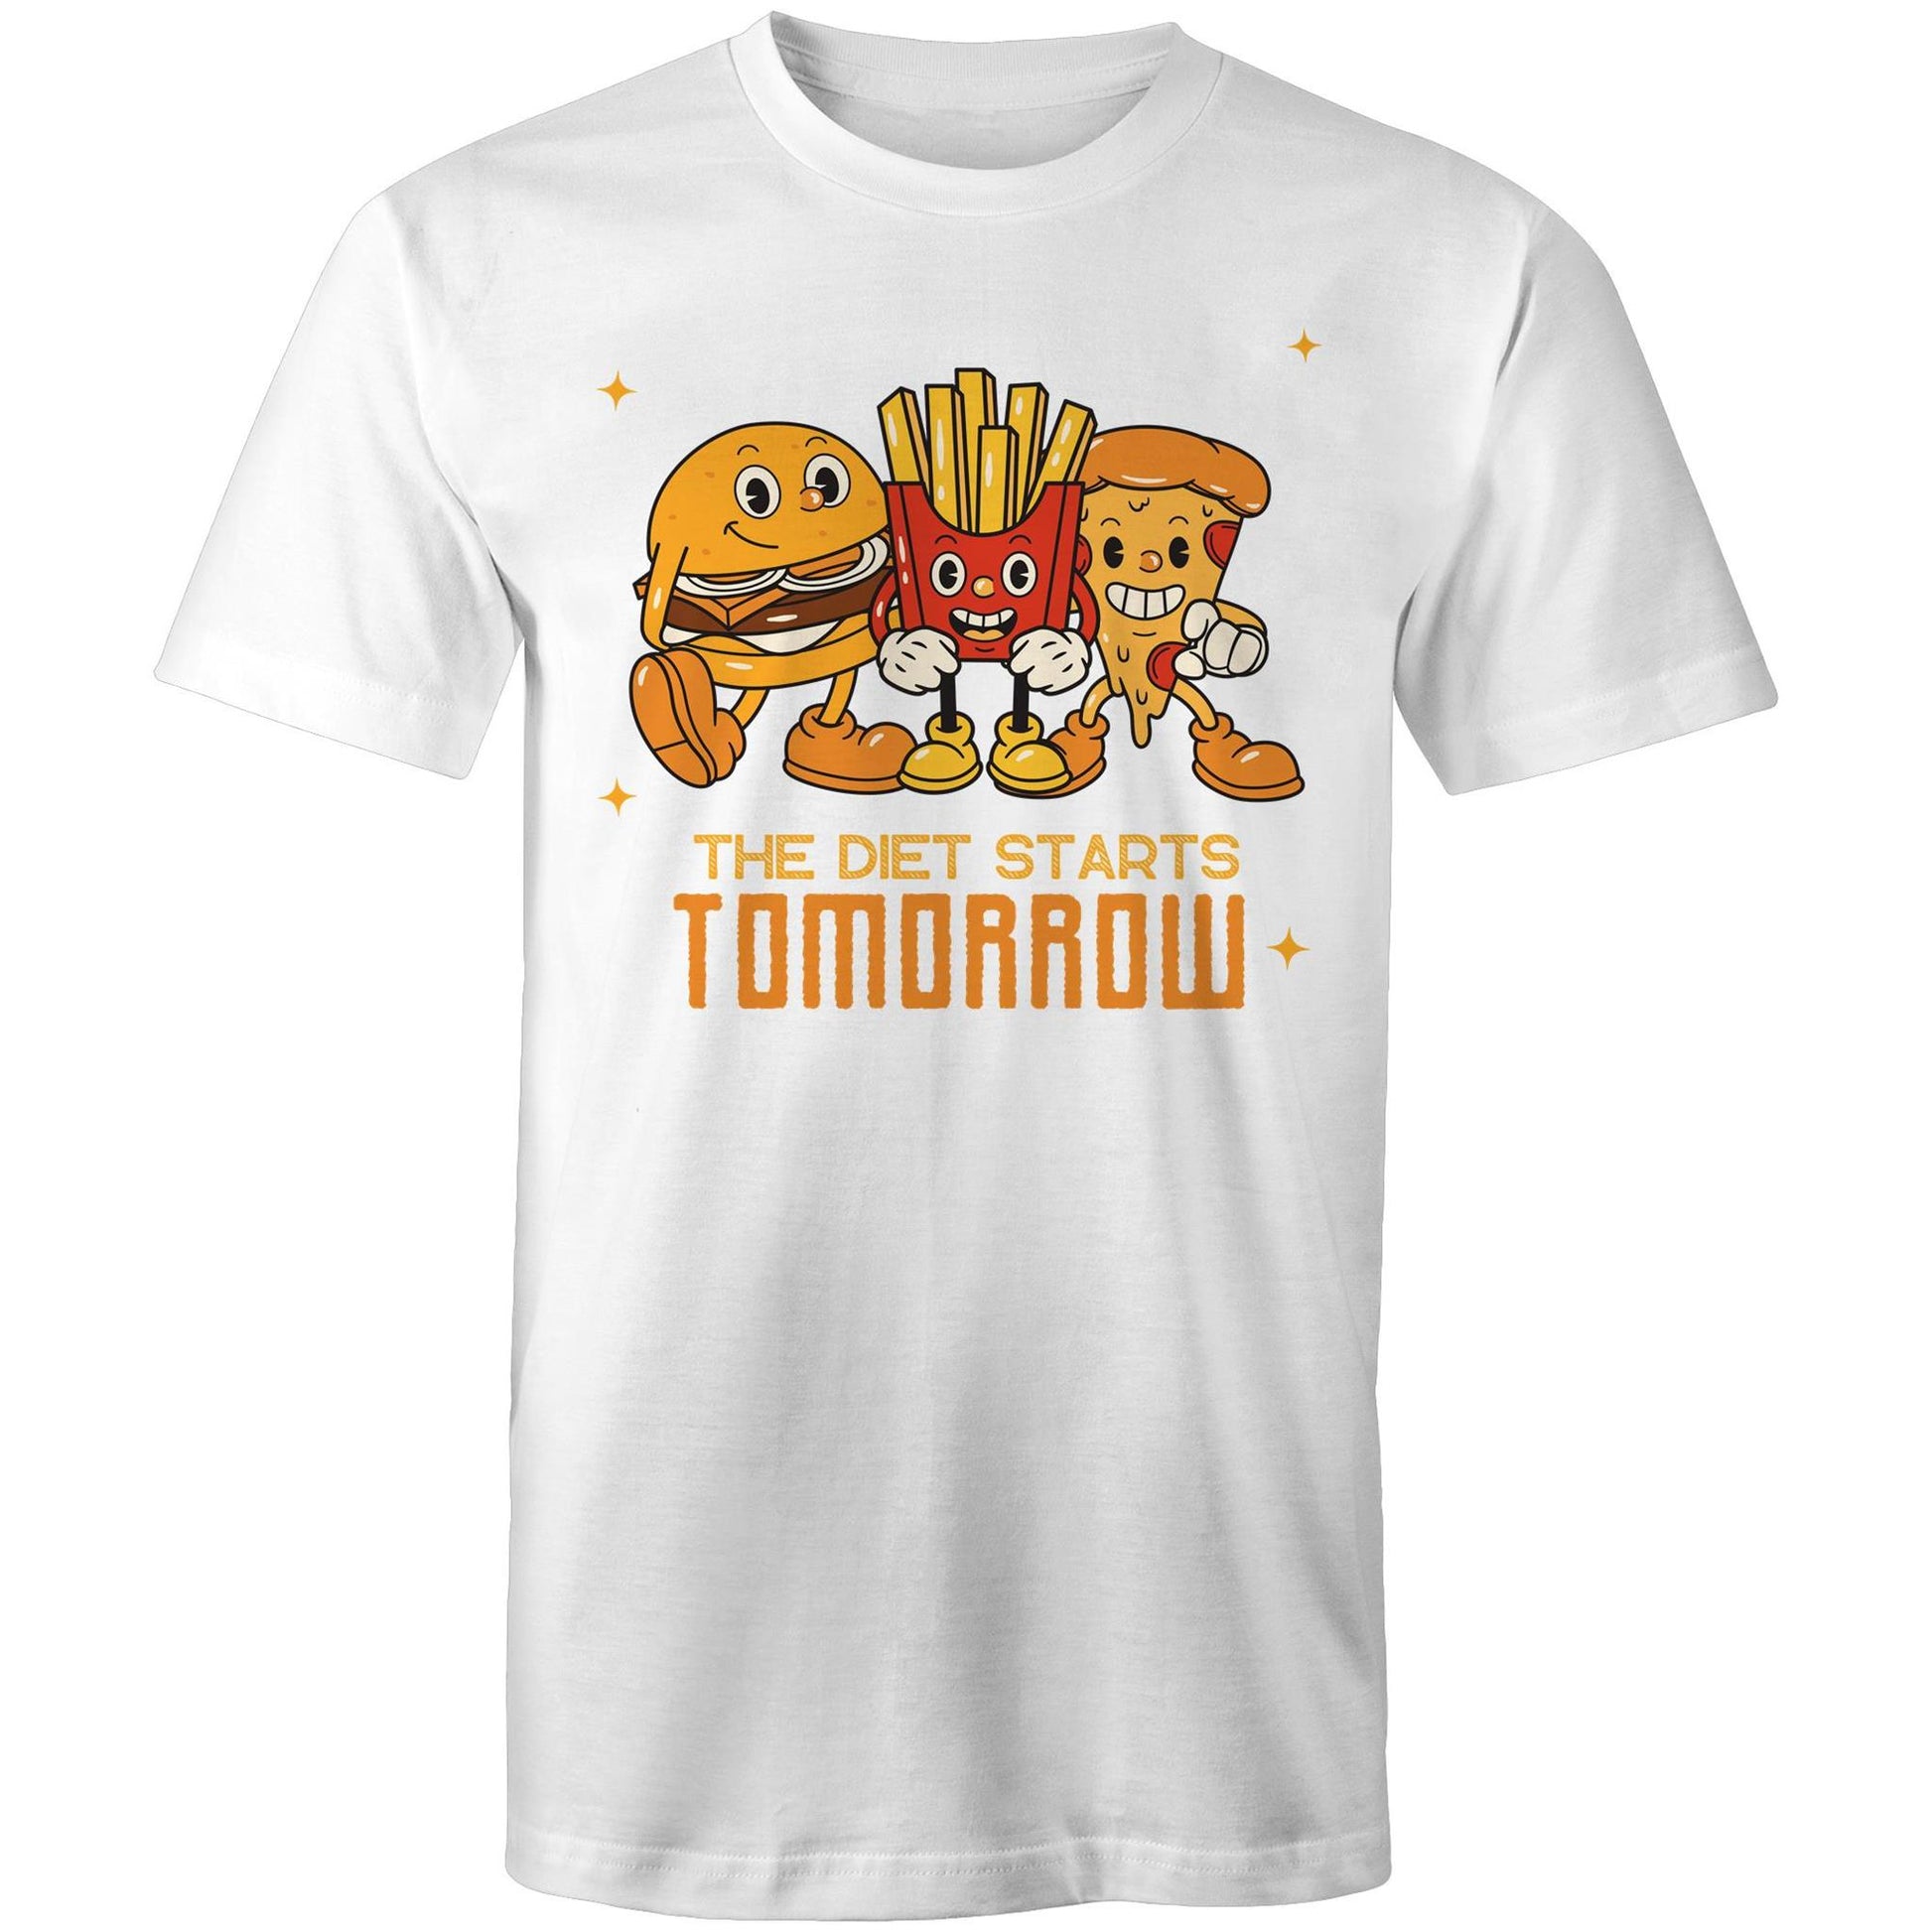 The Diet Starts Tomorrow, Hamburger, Pizza, Fries - Mens T-Shirt White Mens T-shirt Food Funny Retro